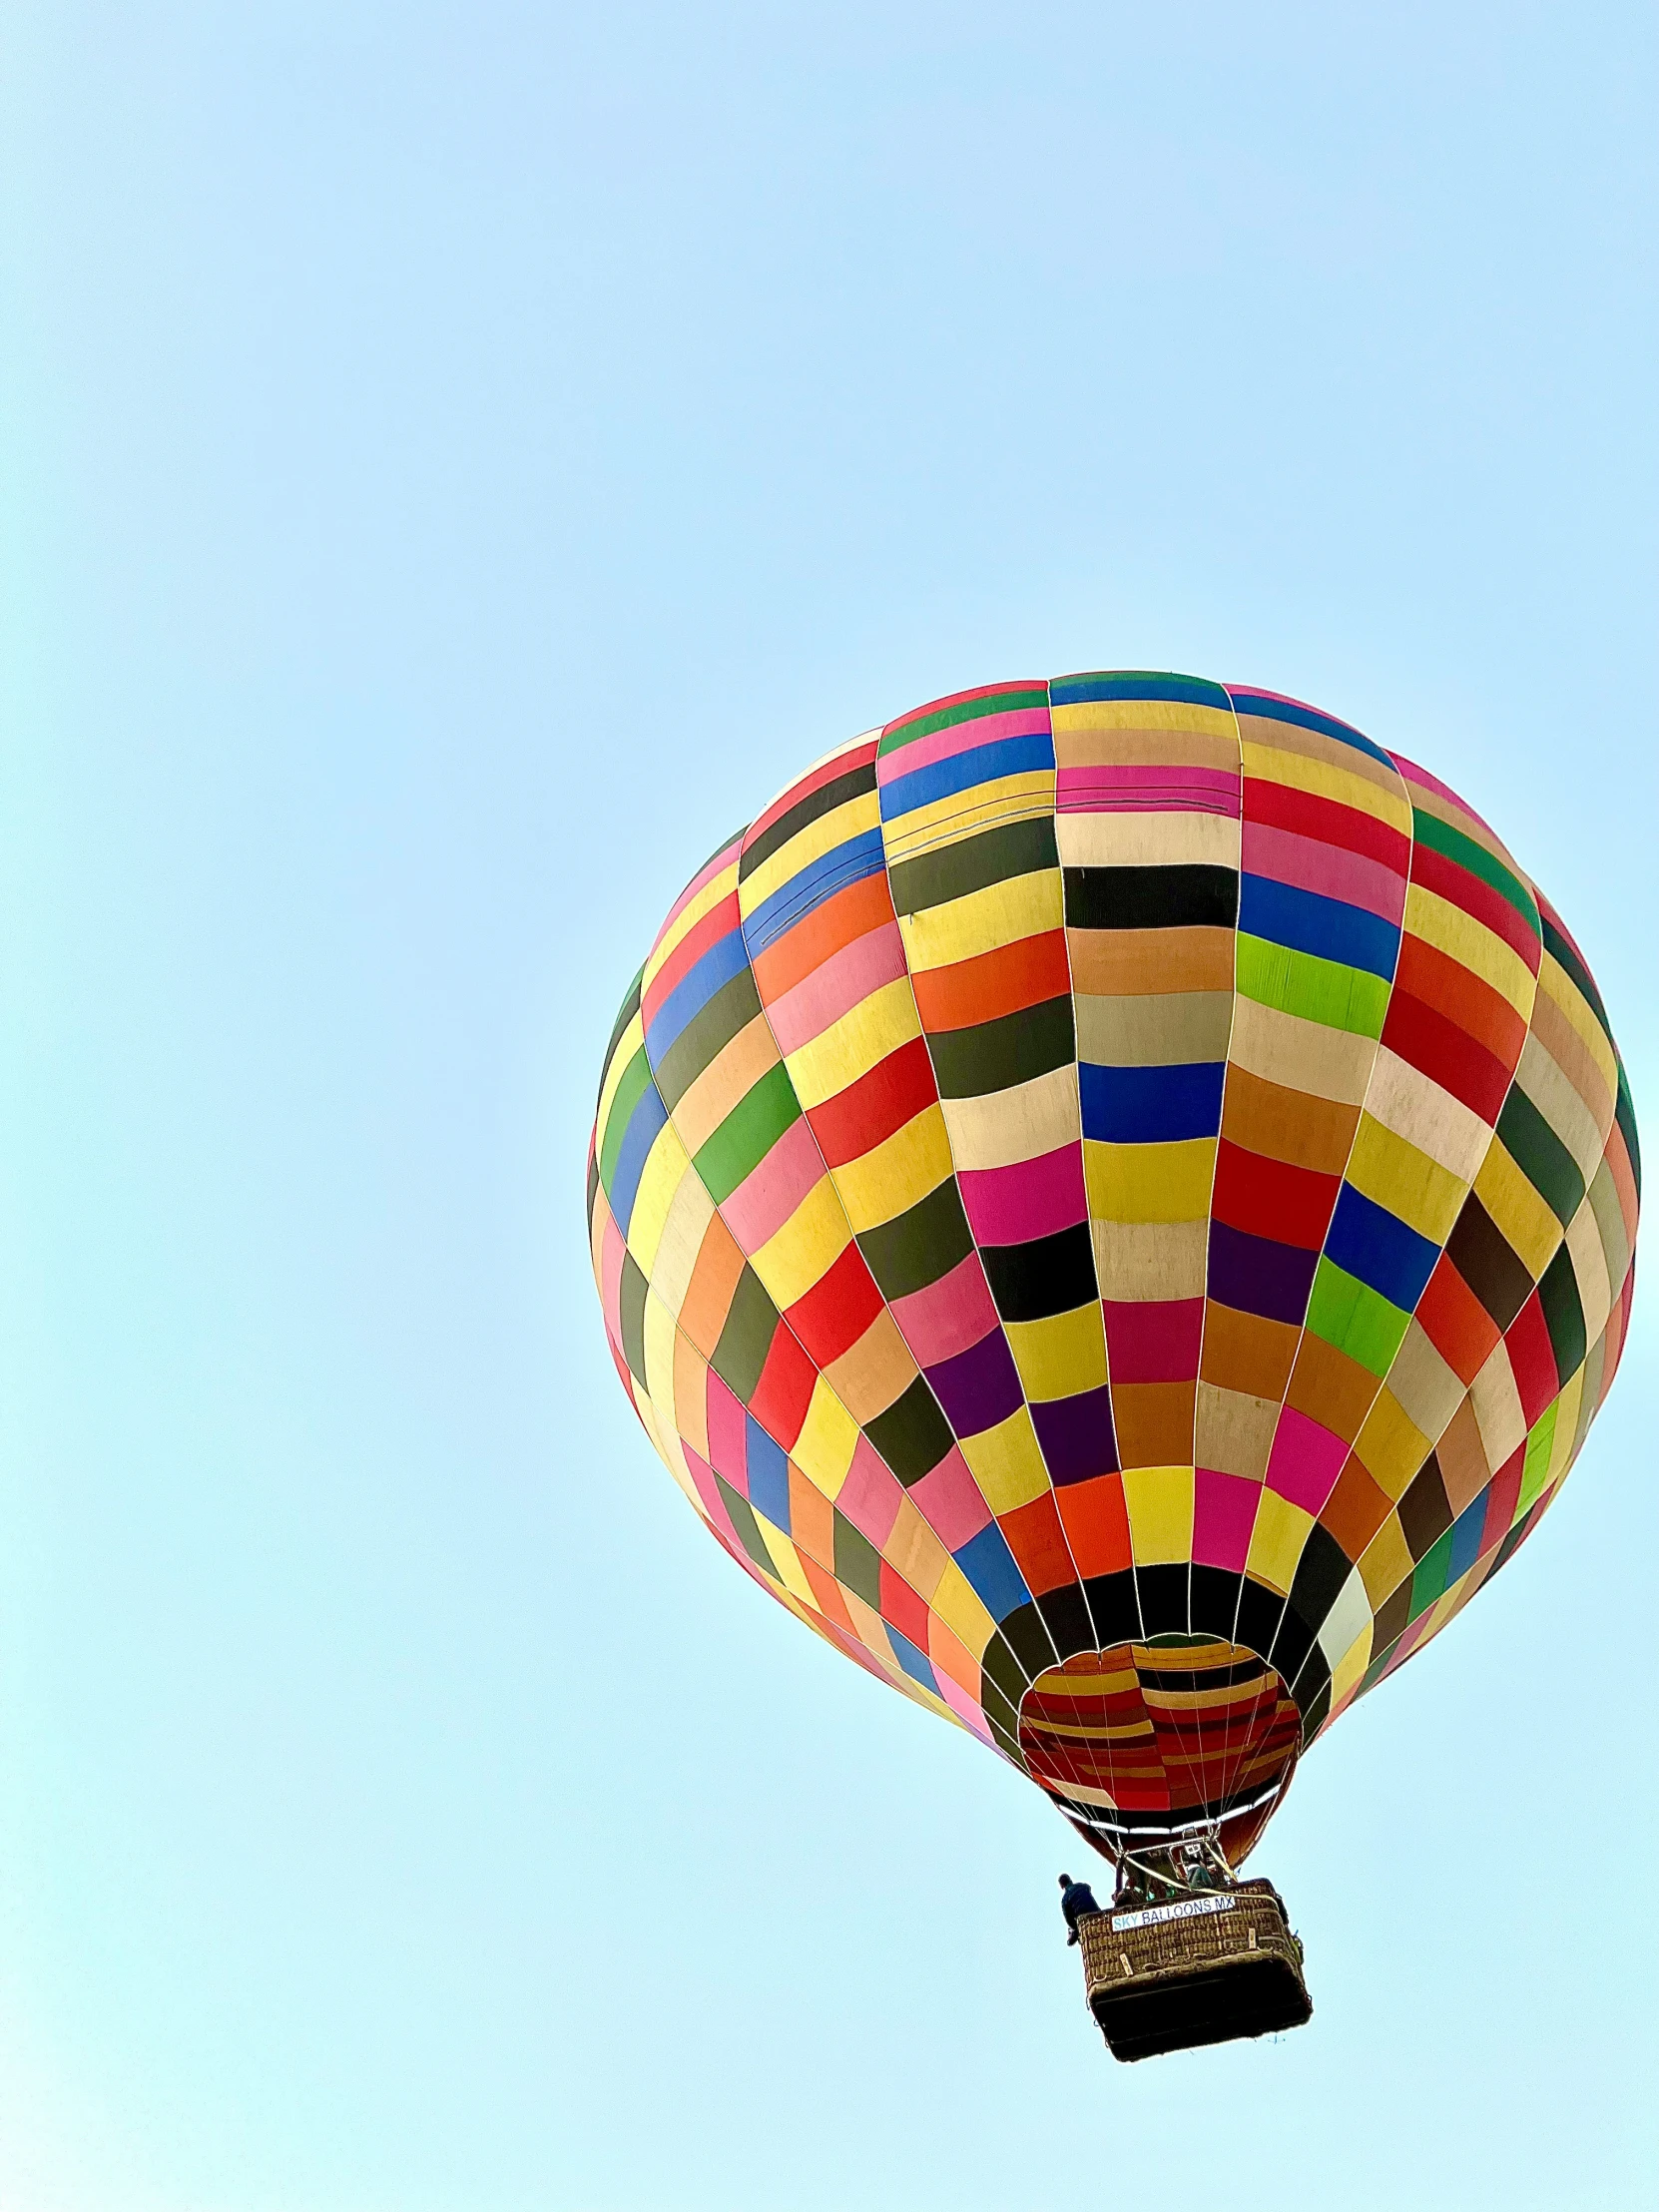 a colorful  air balloon flies through the sky